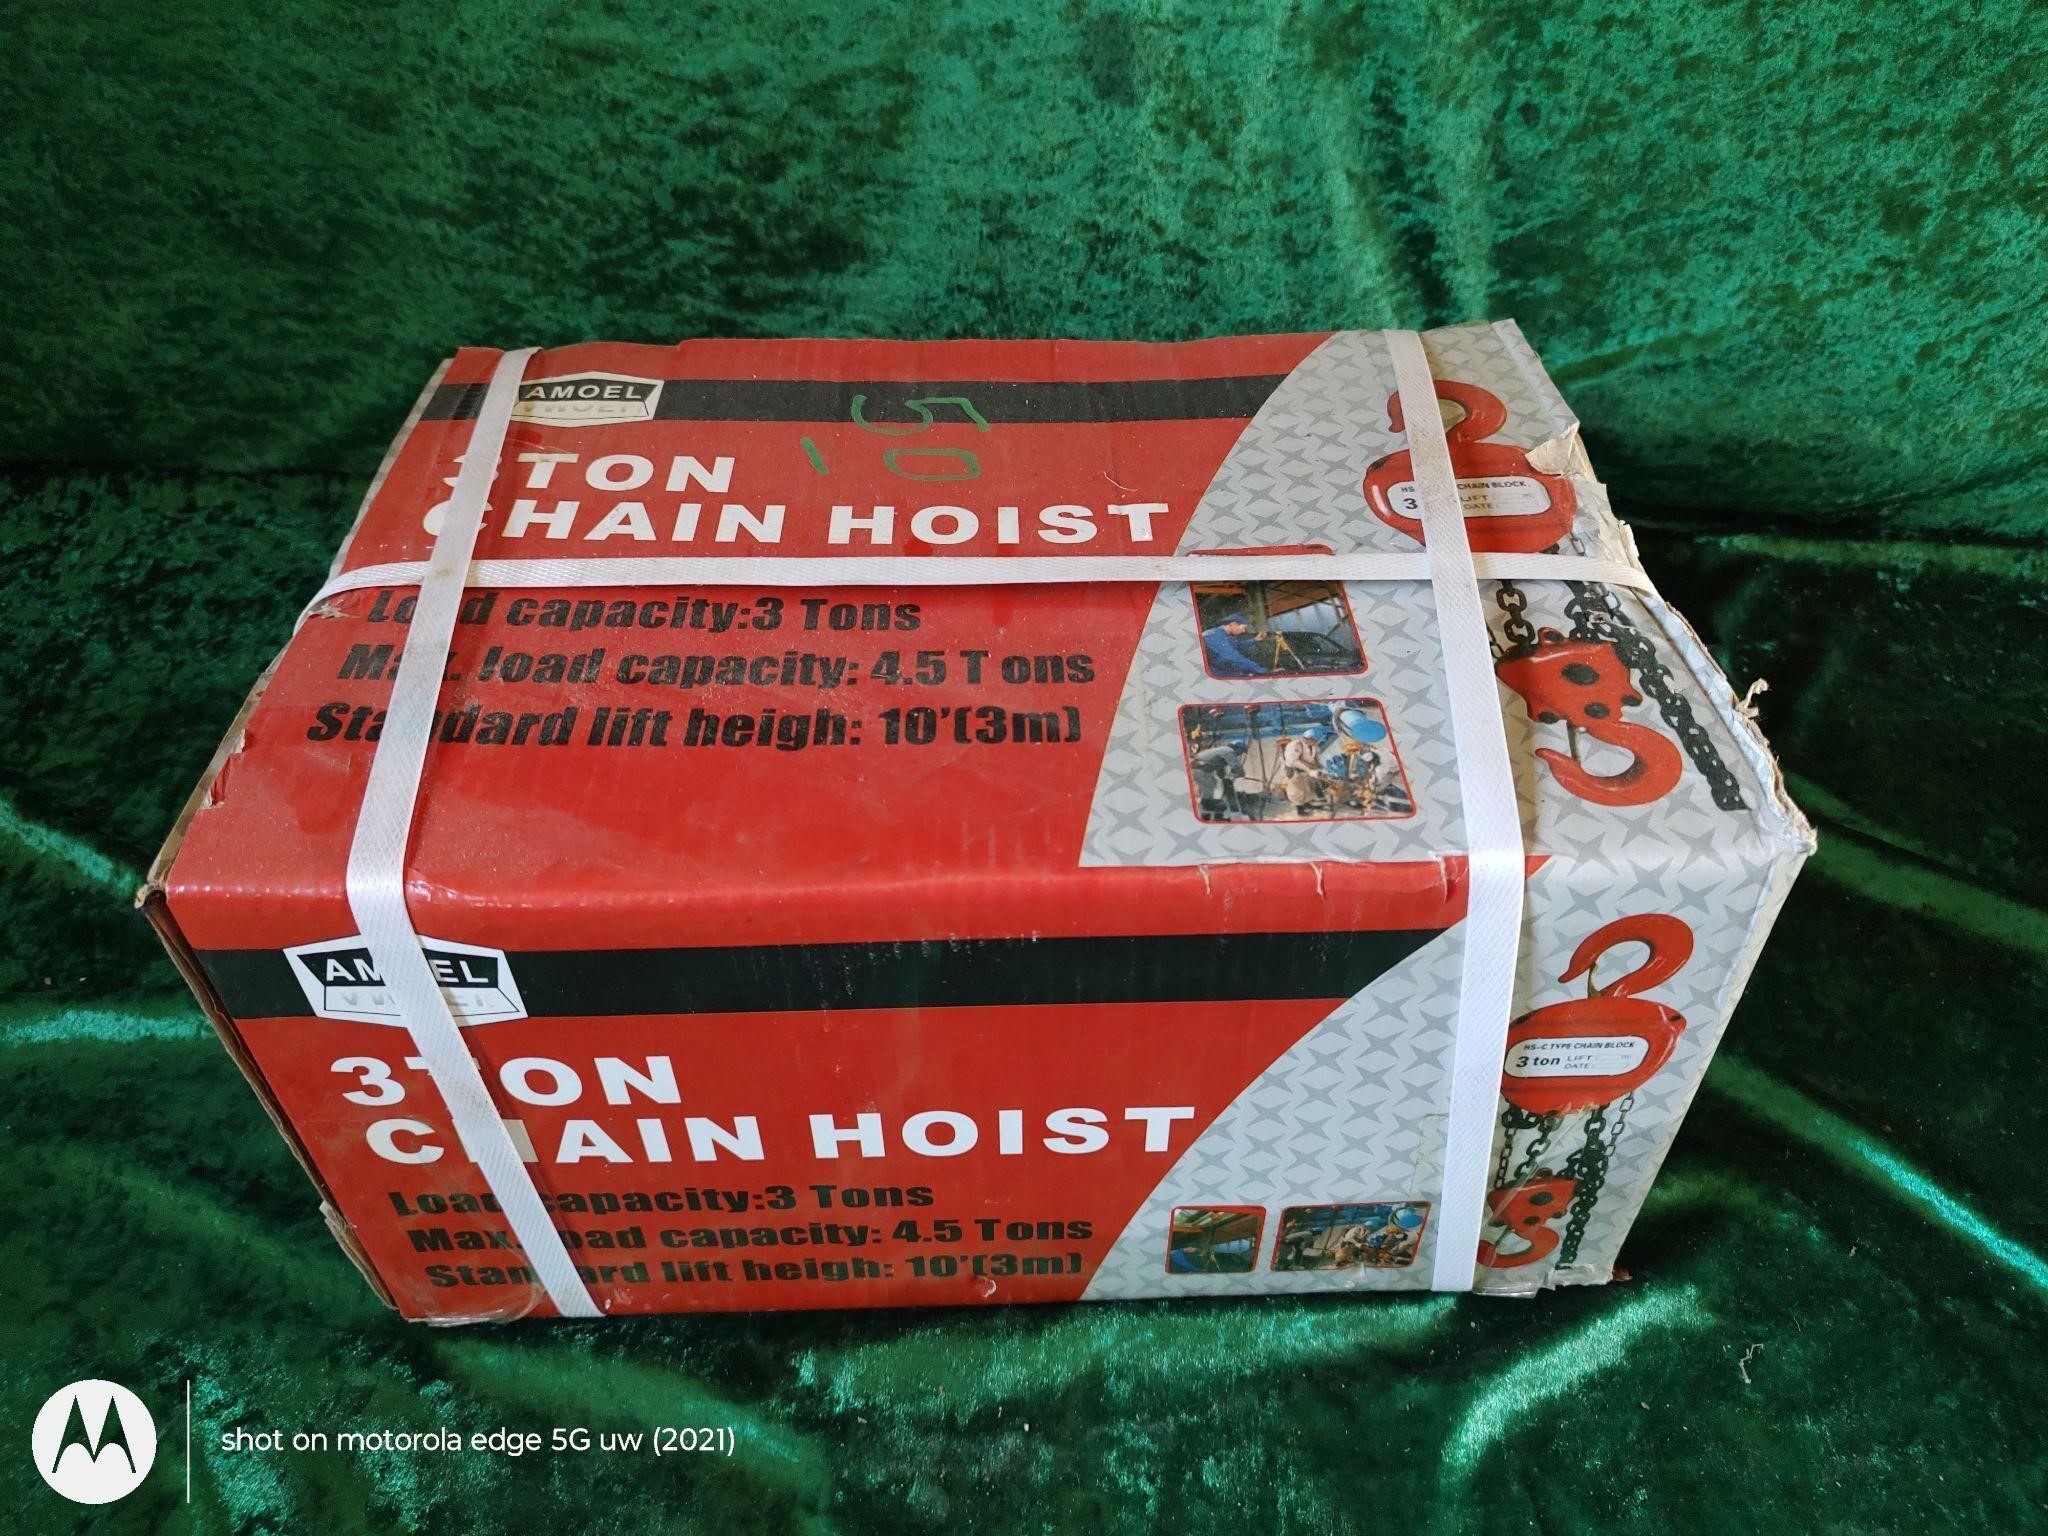 3 ton chain hoist amoel brand New in Box